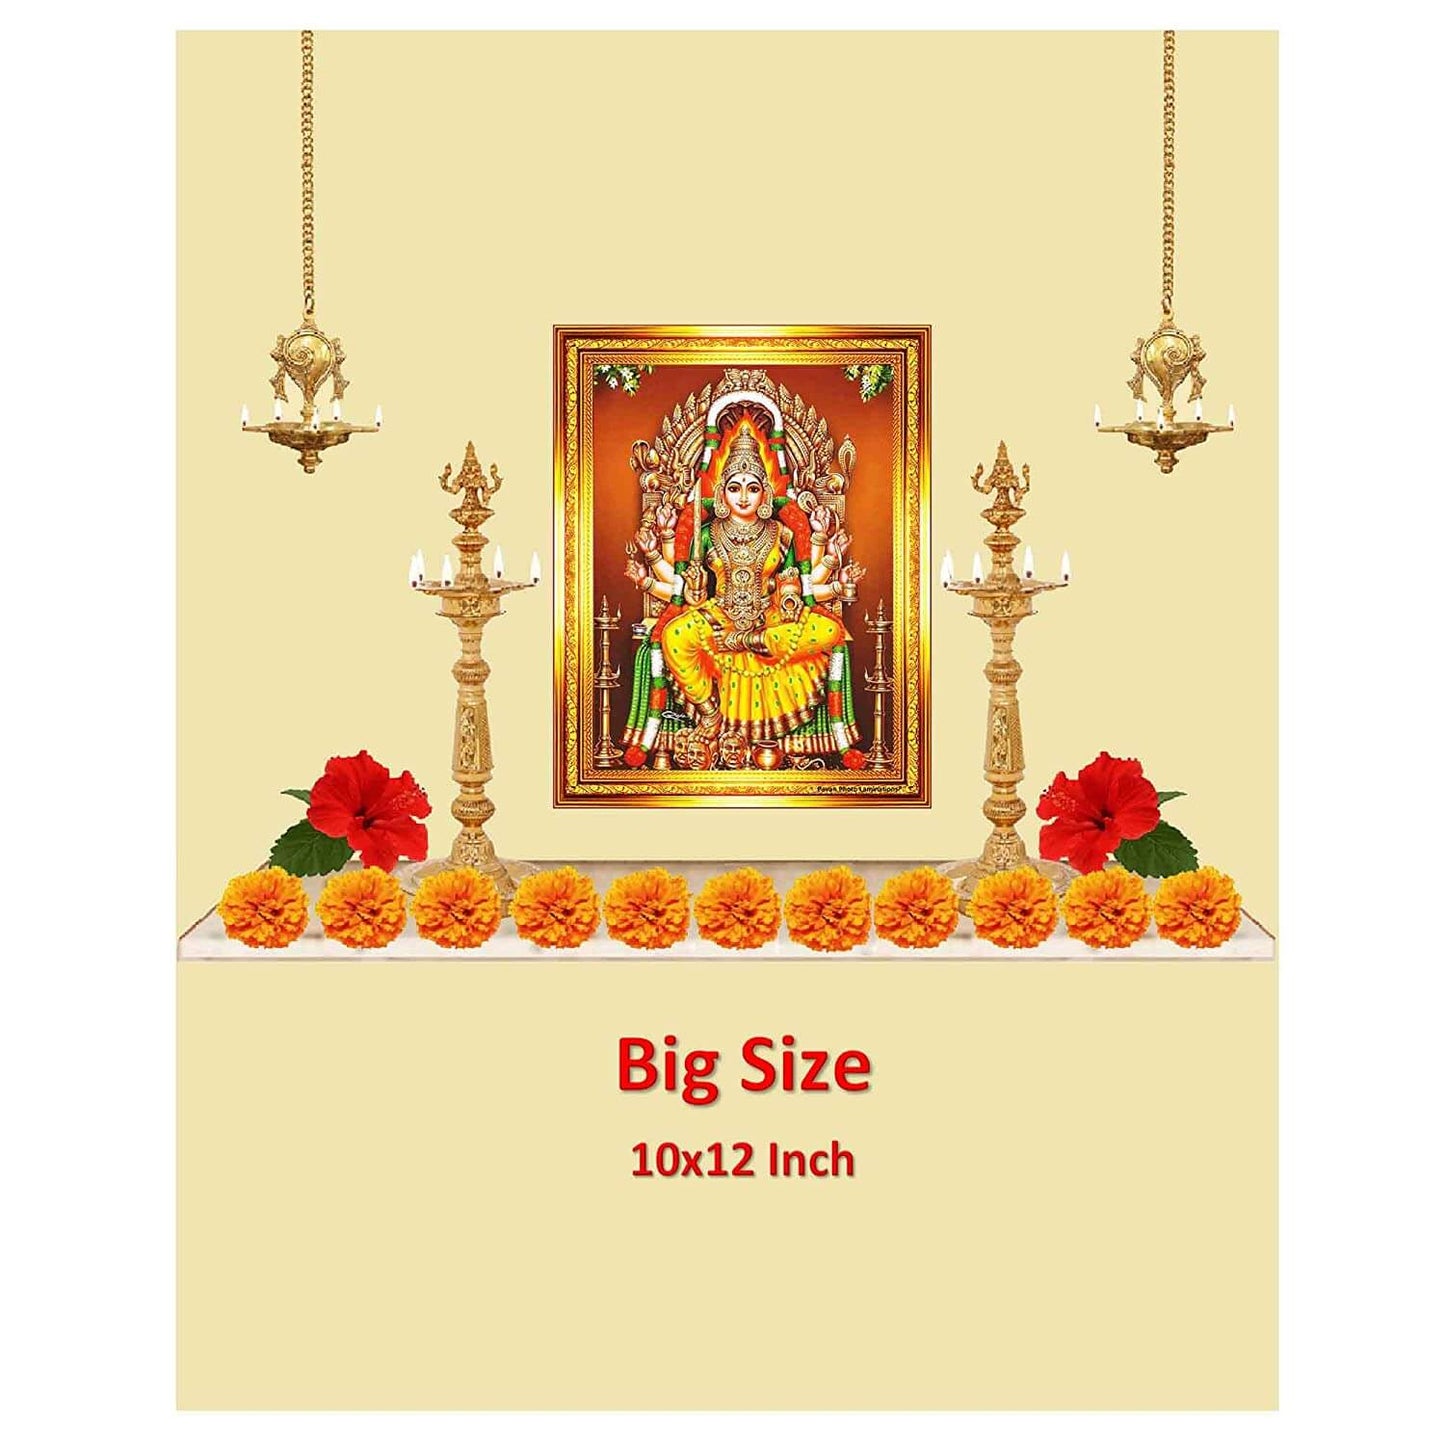 Sri Samayapuram Mariamman Shakthi Amman Photo Frame (Golden Color, Medium Size 26x32cm)